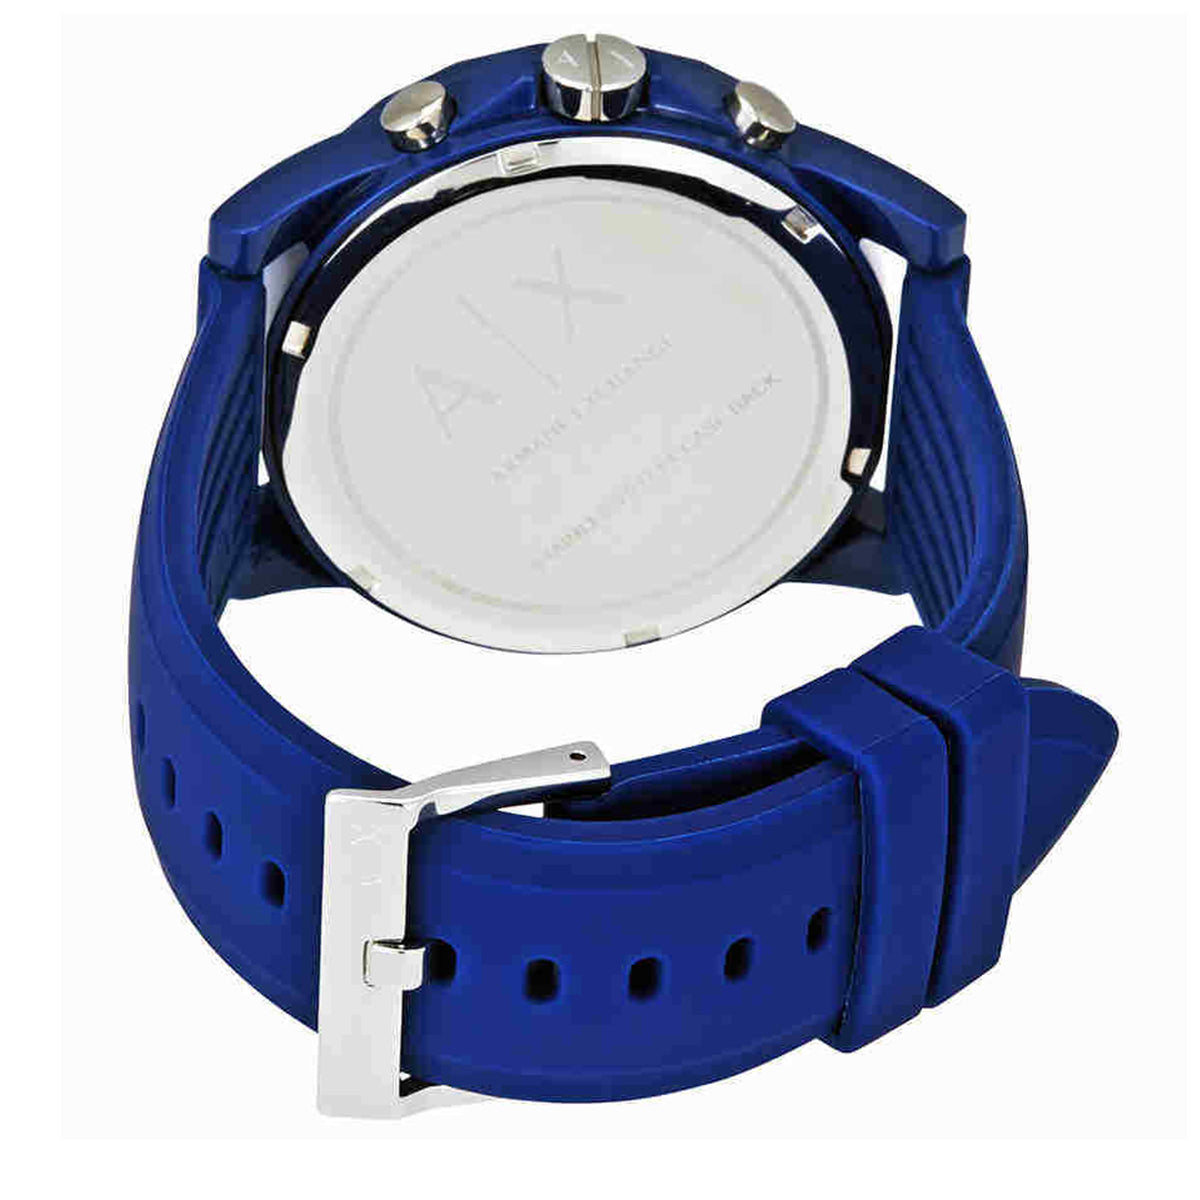 Armani Exchange Men's Watch Outerbanks AX1327 | Watches Prime